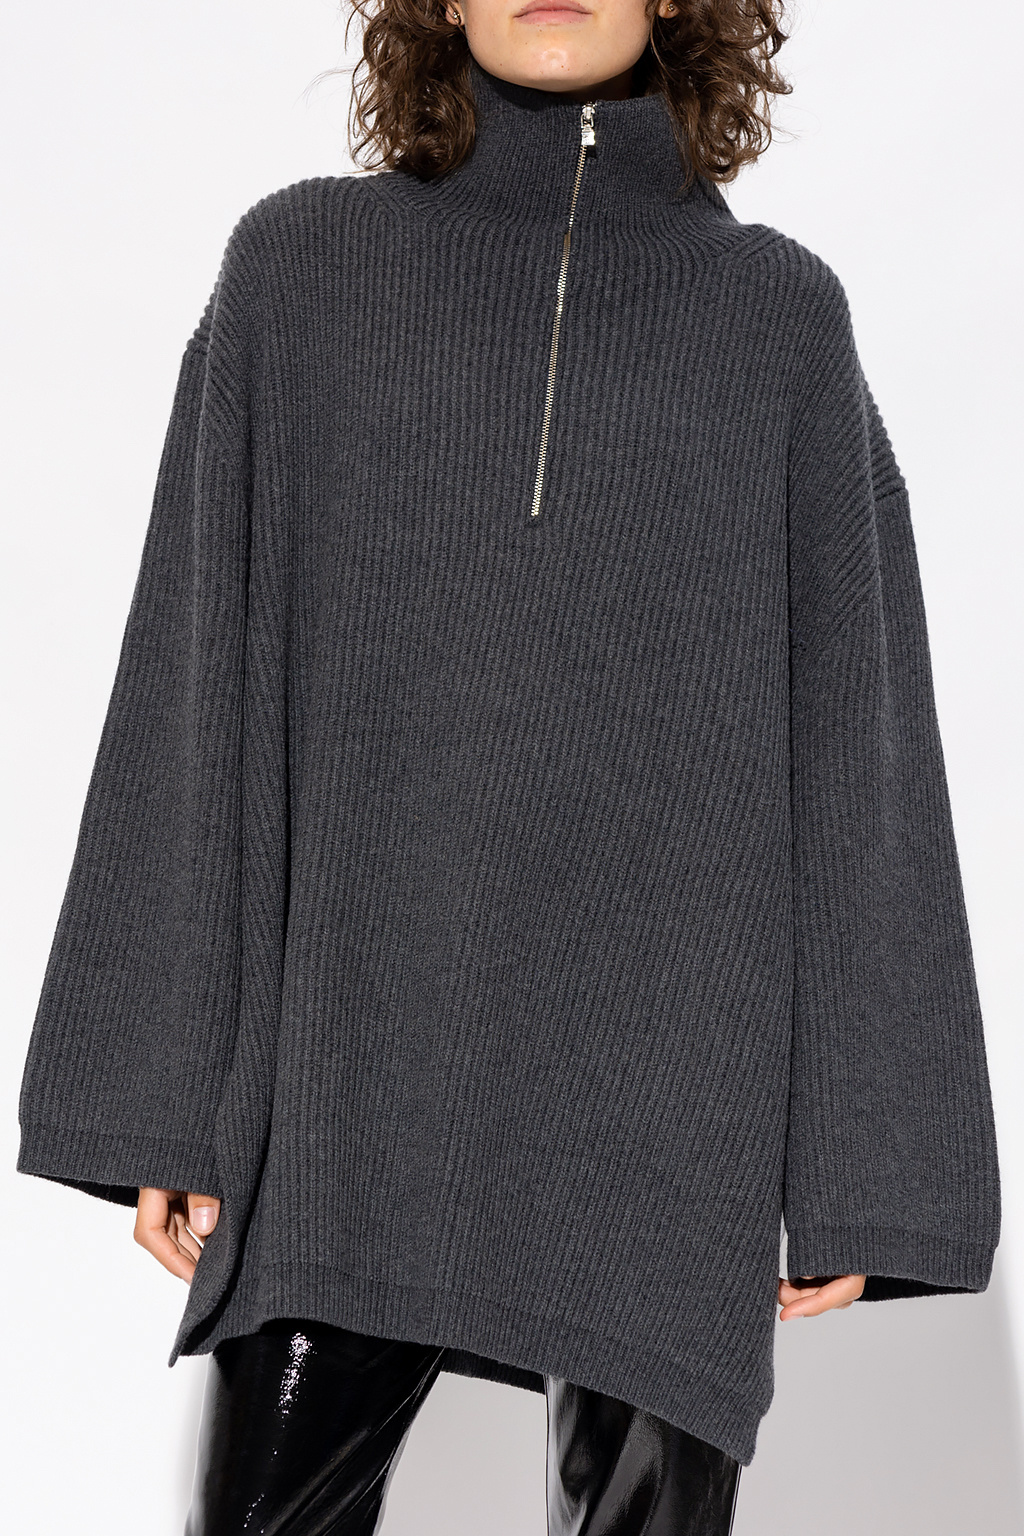 Totême Oversize turtleneck dry sweater